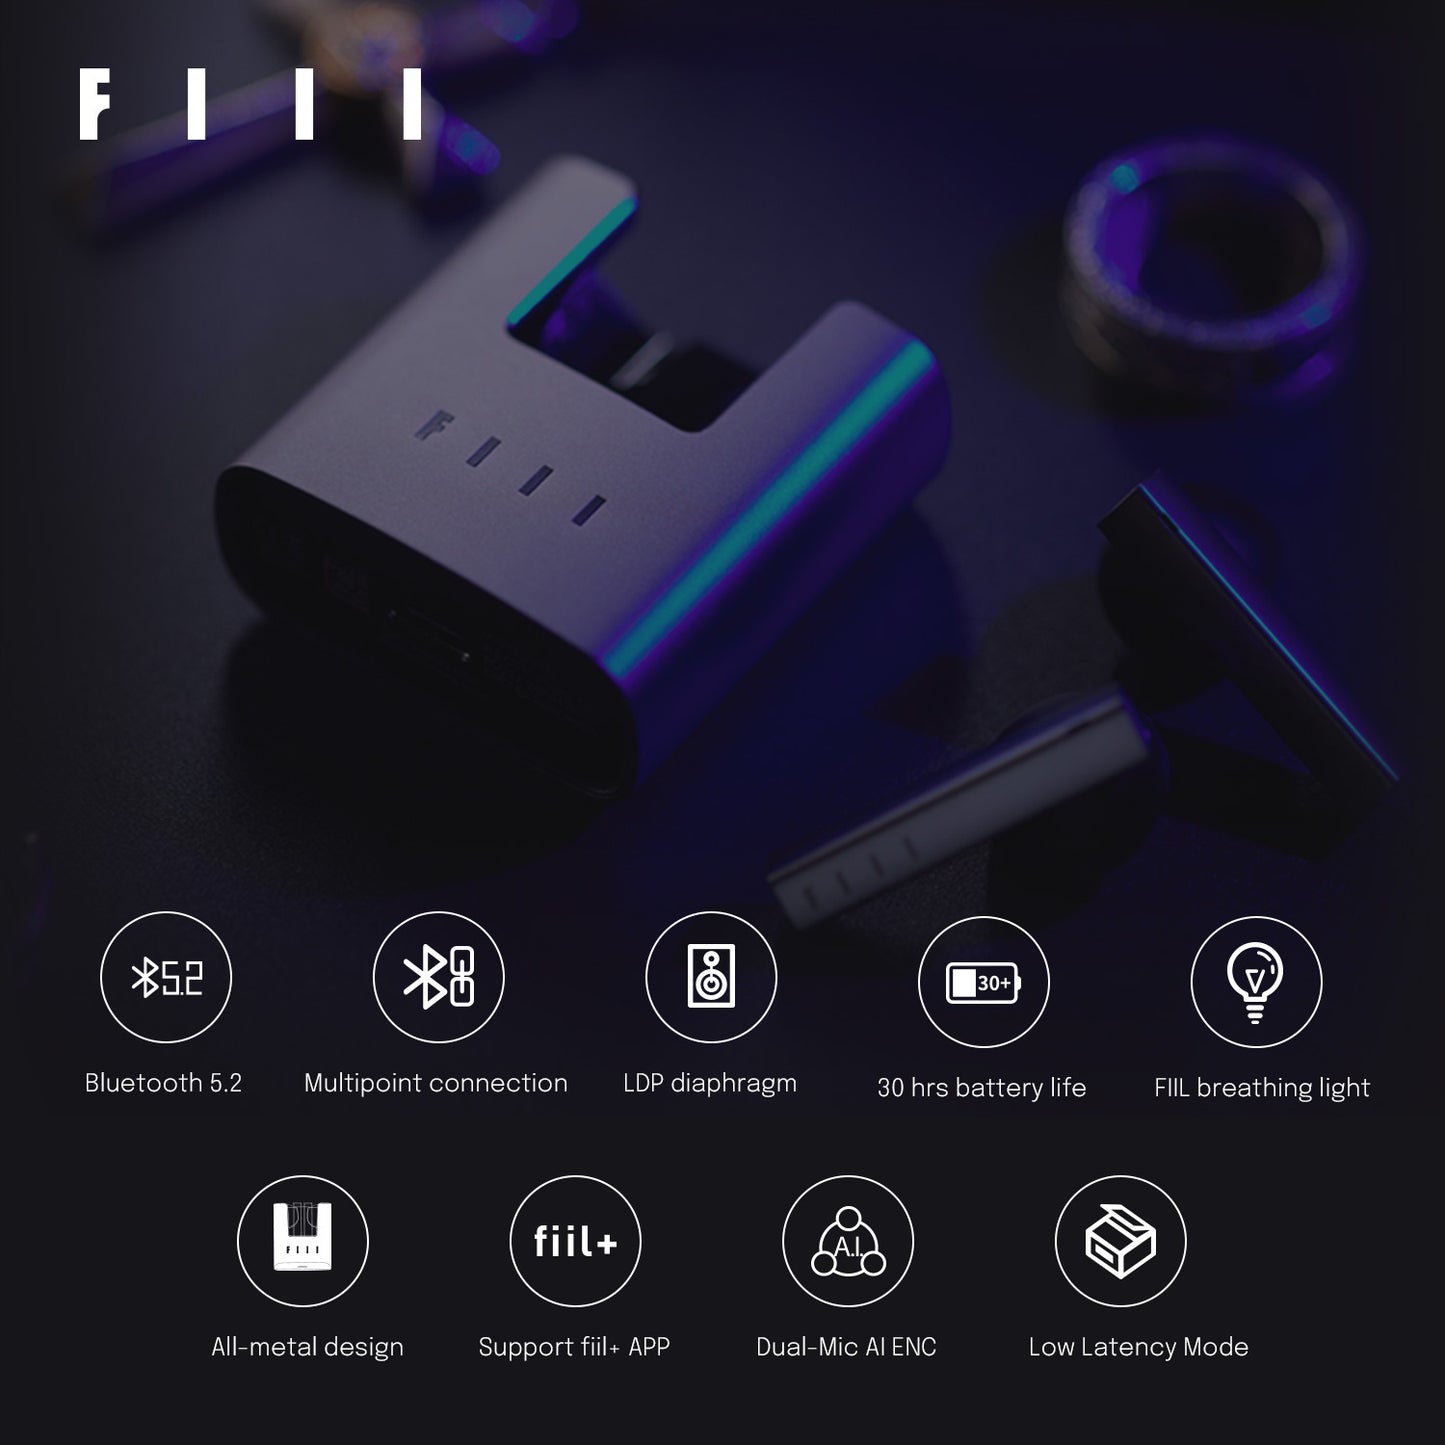 FIIL CC nano True Wireless Earbuds Bluetooth5.2 in-Ear Headphones All-metal design + FIIL breathing light (NEW)